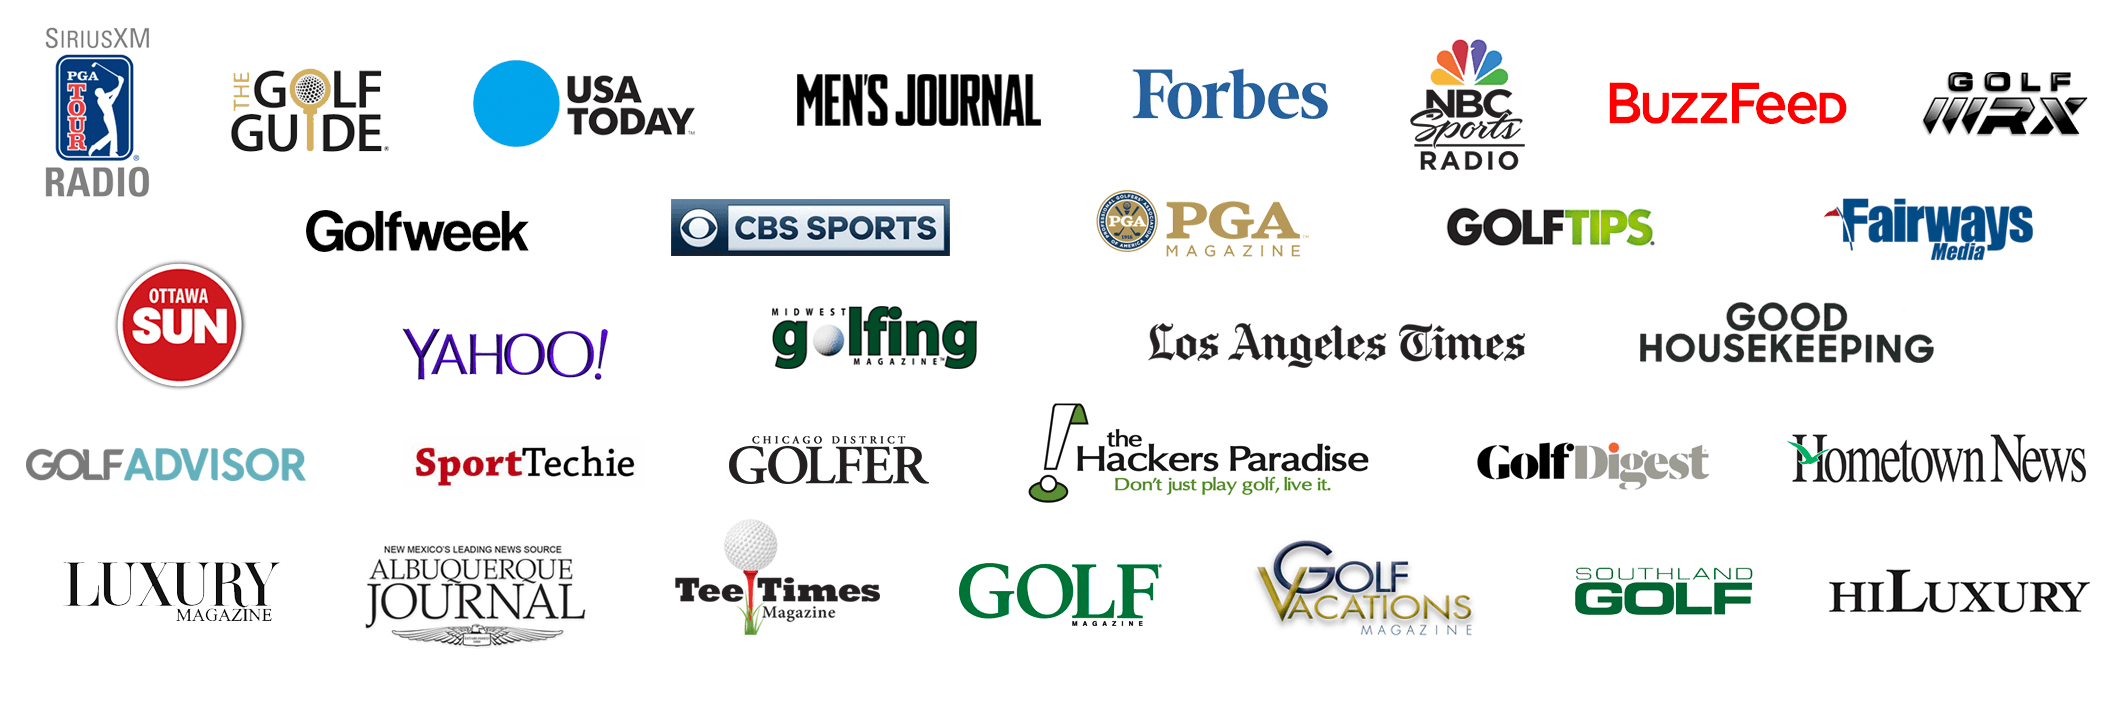 Image Press Icons Golf